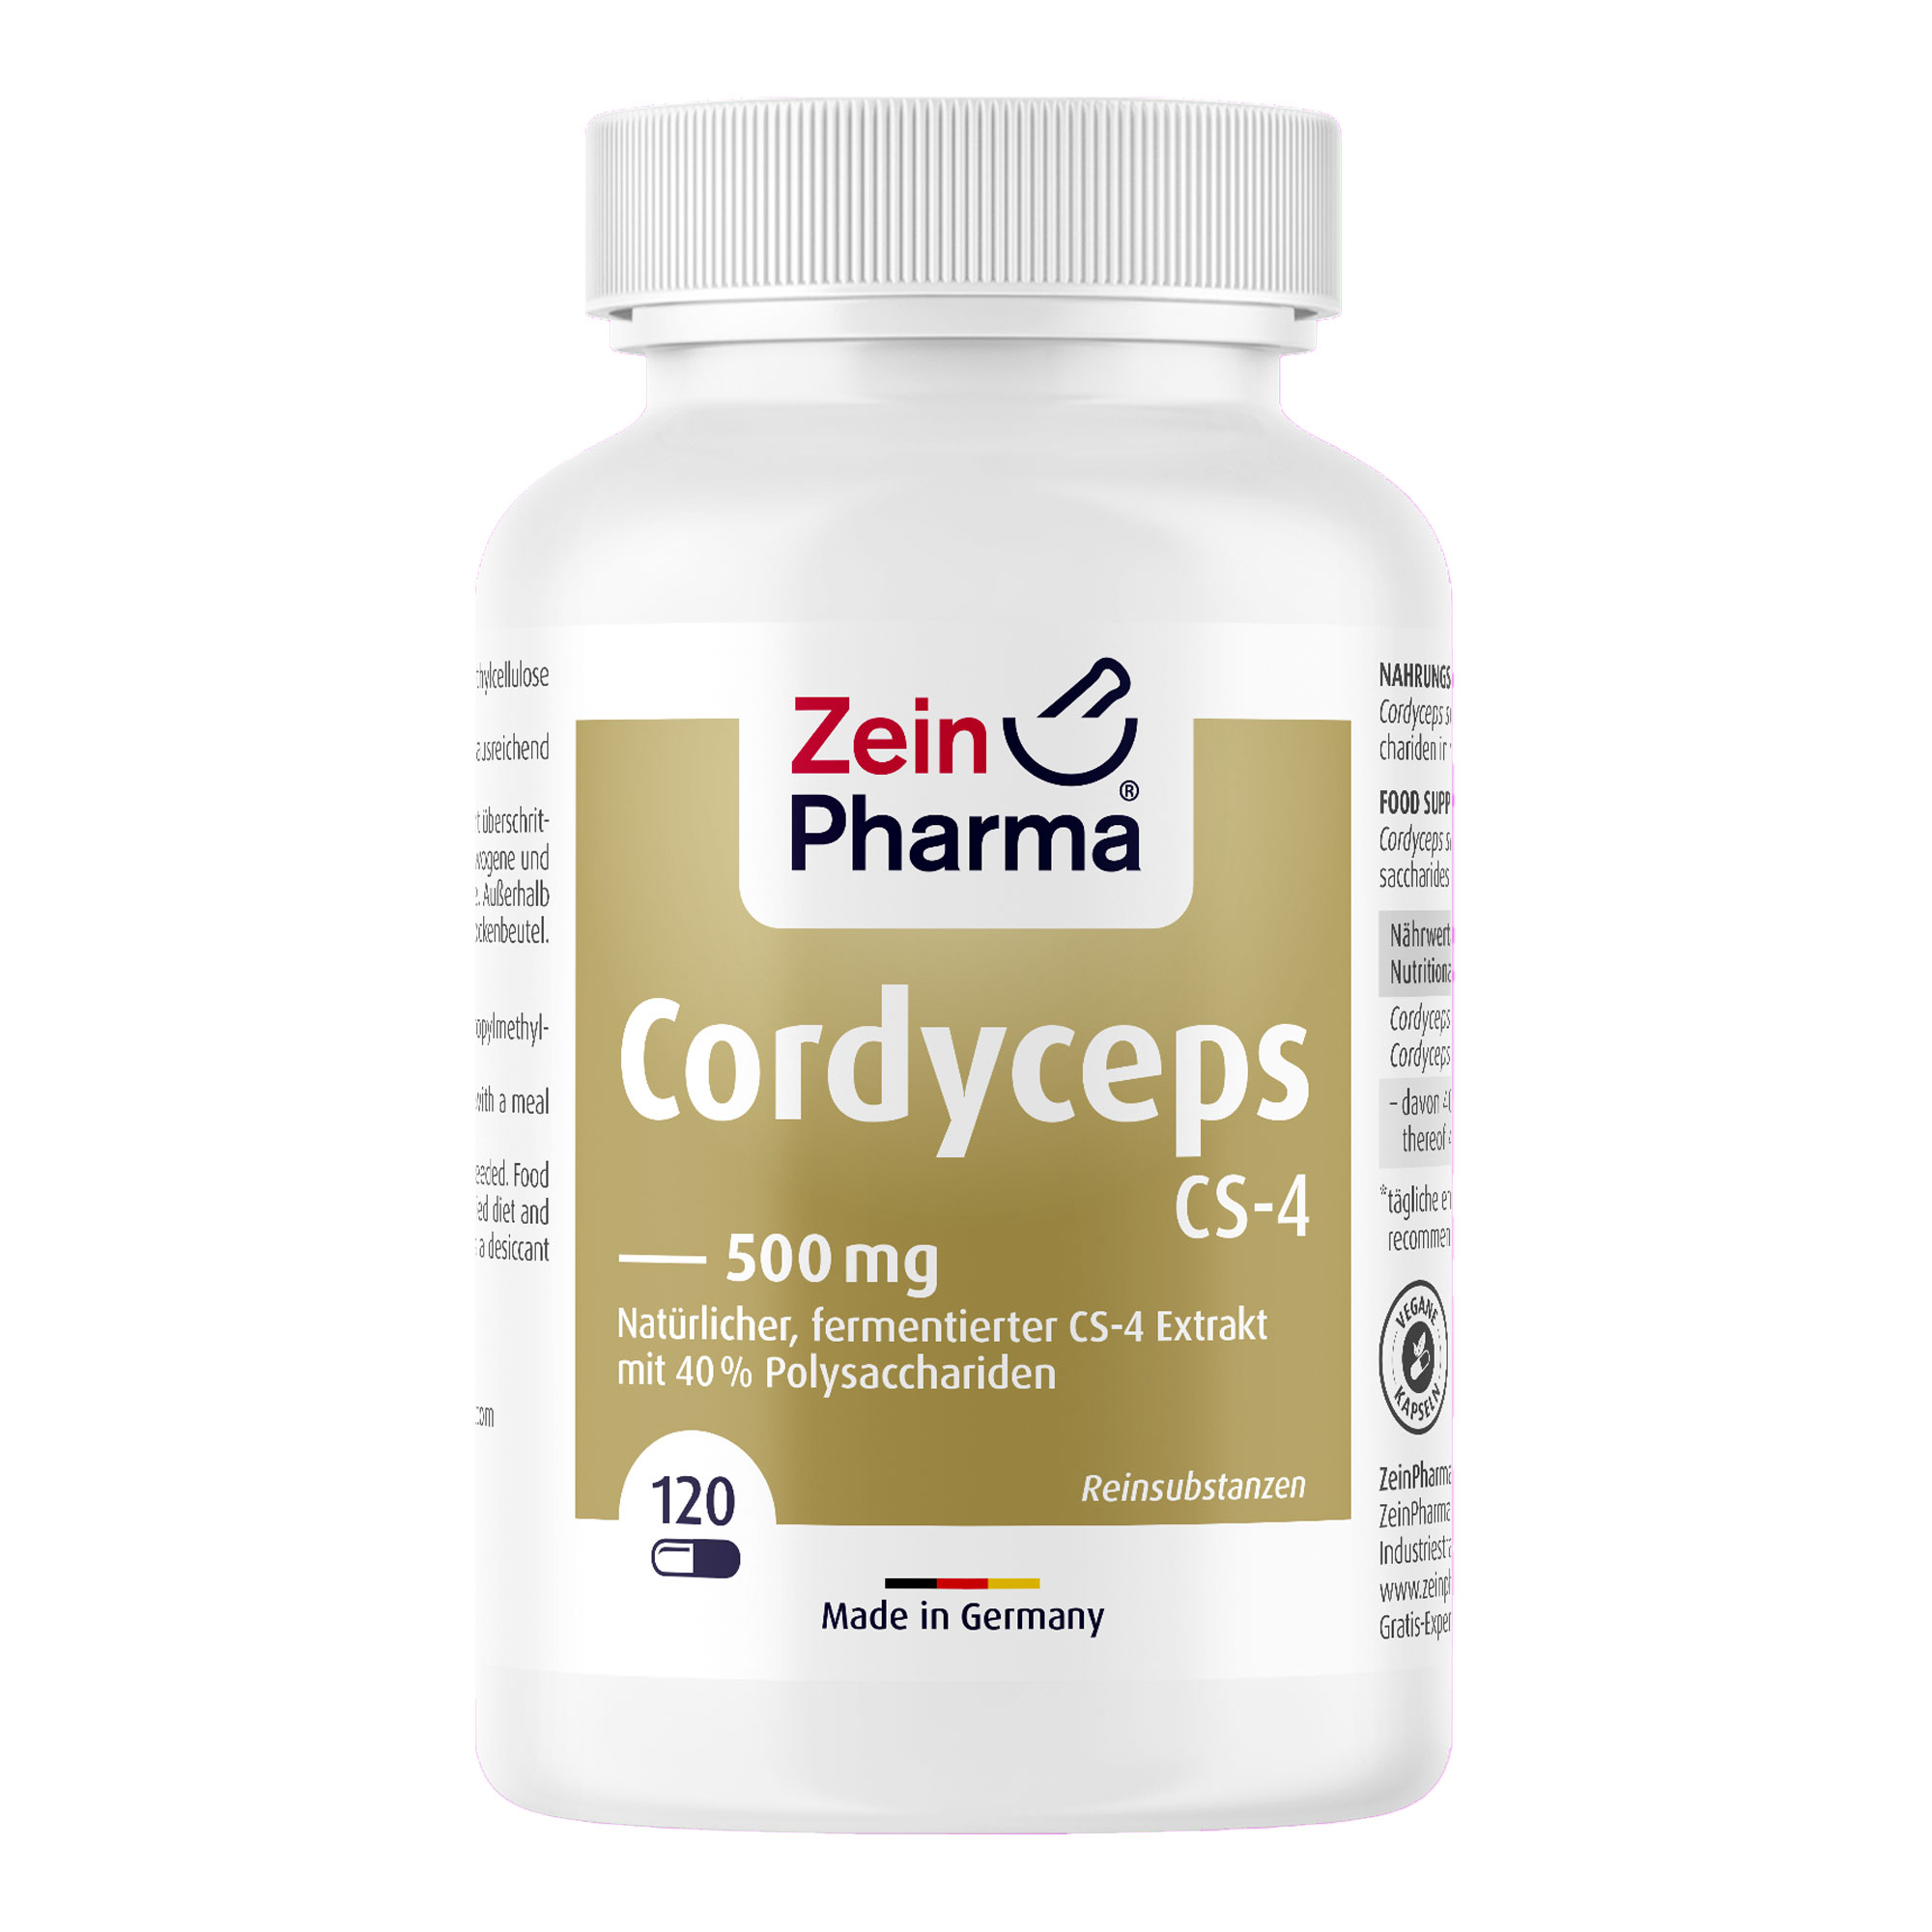 Nahrungsergänzungsmittel mit Cordyceps sinensis CS-4-Extrakt (enthält mindestens 40 % Polysacchariden) in veganen Kapseln.